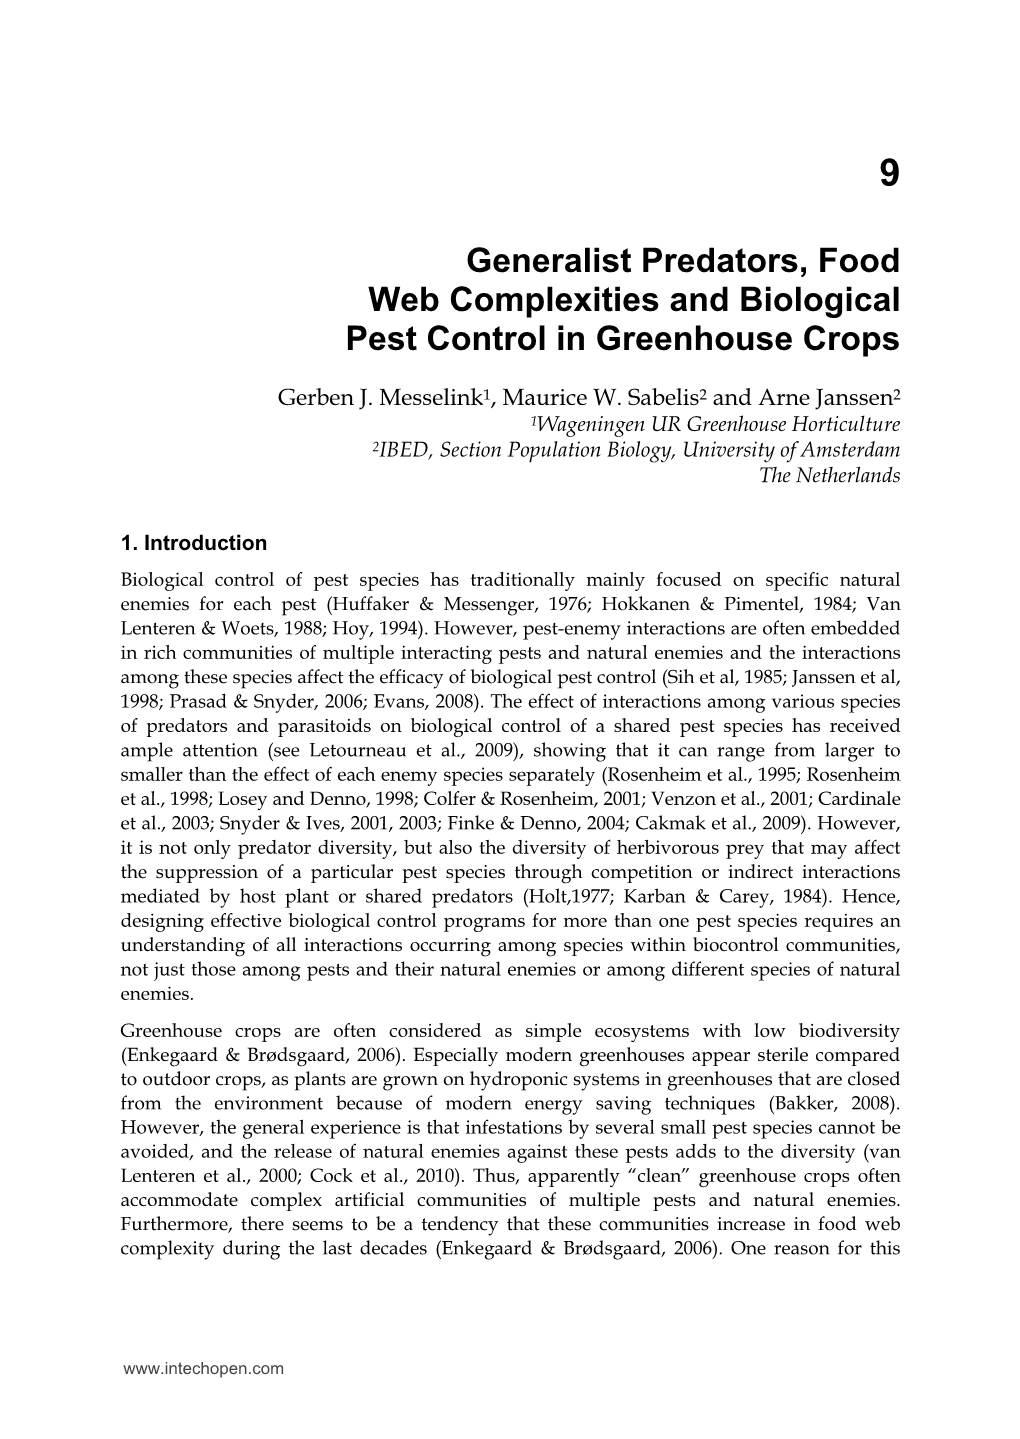 Generalist Predators, Food Web Complexities and Biological Pest Control in Greenhouse Crops